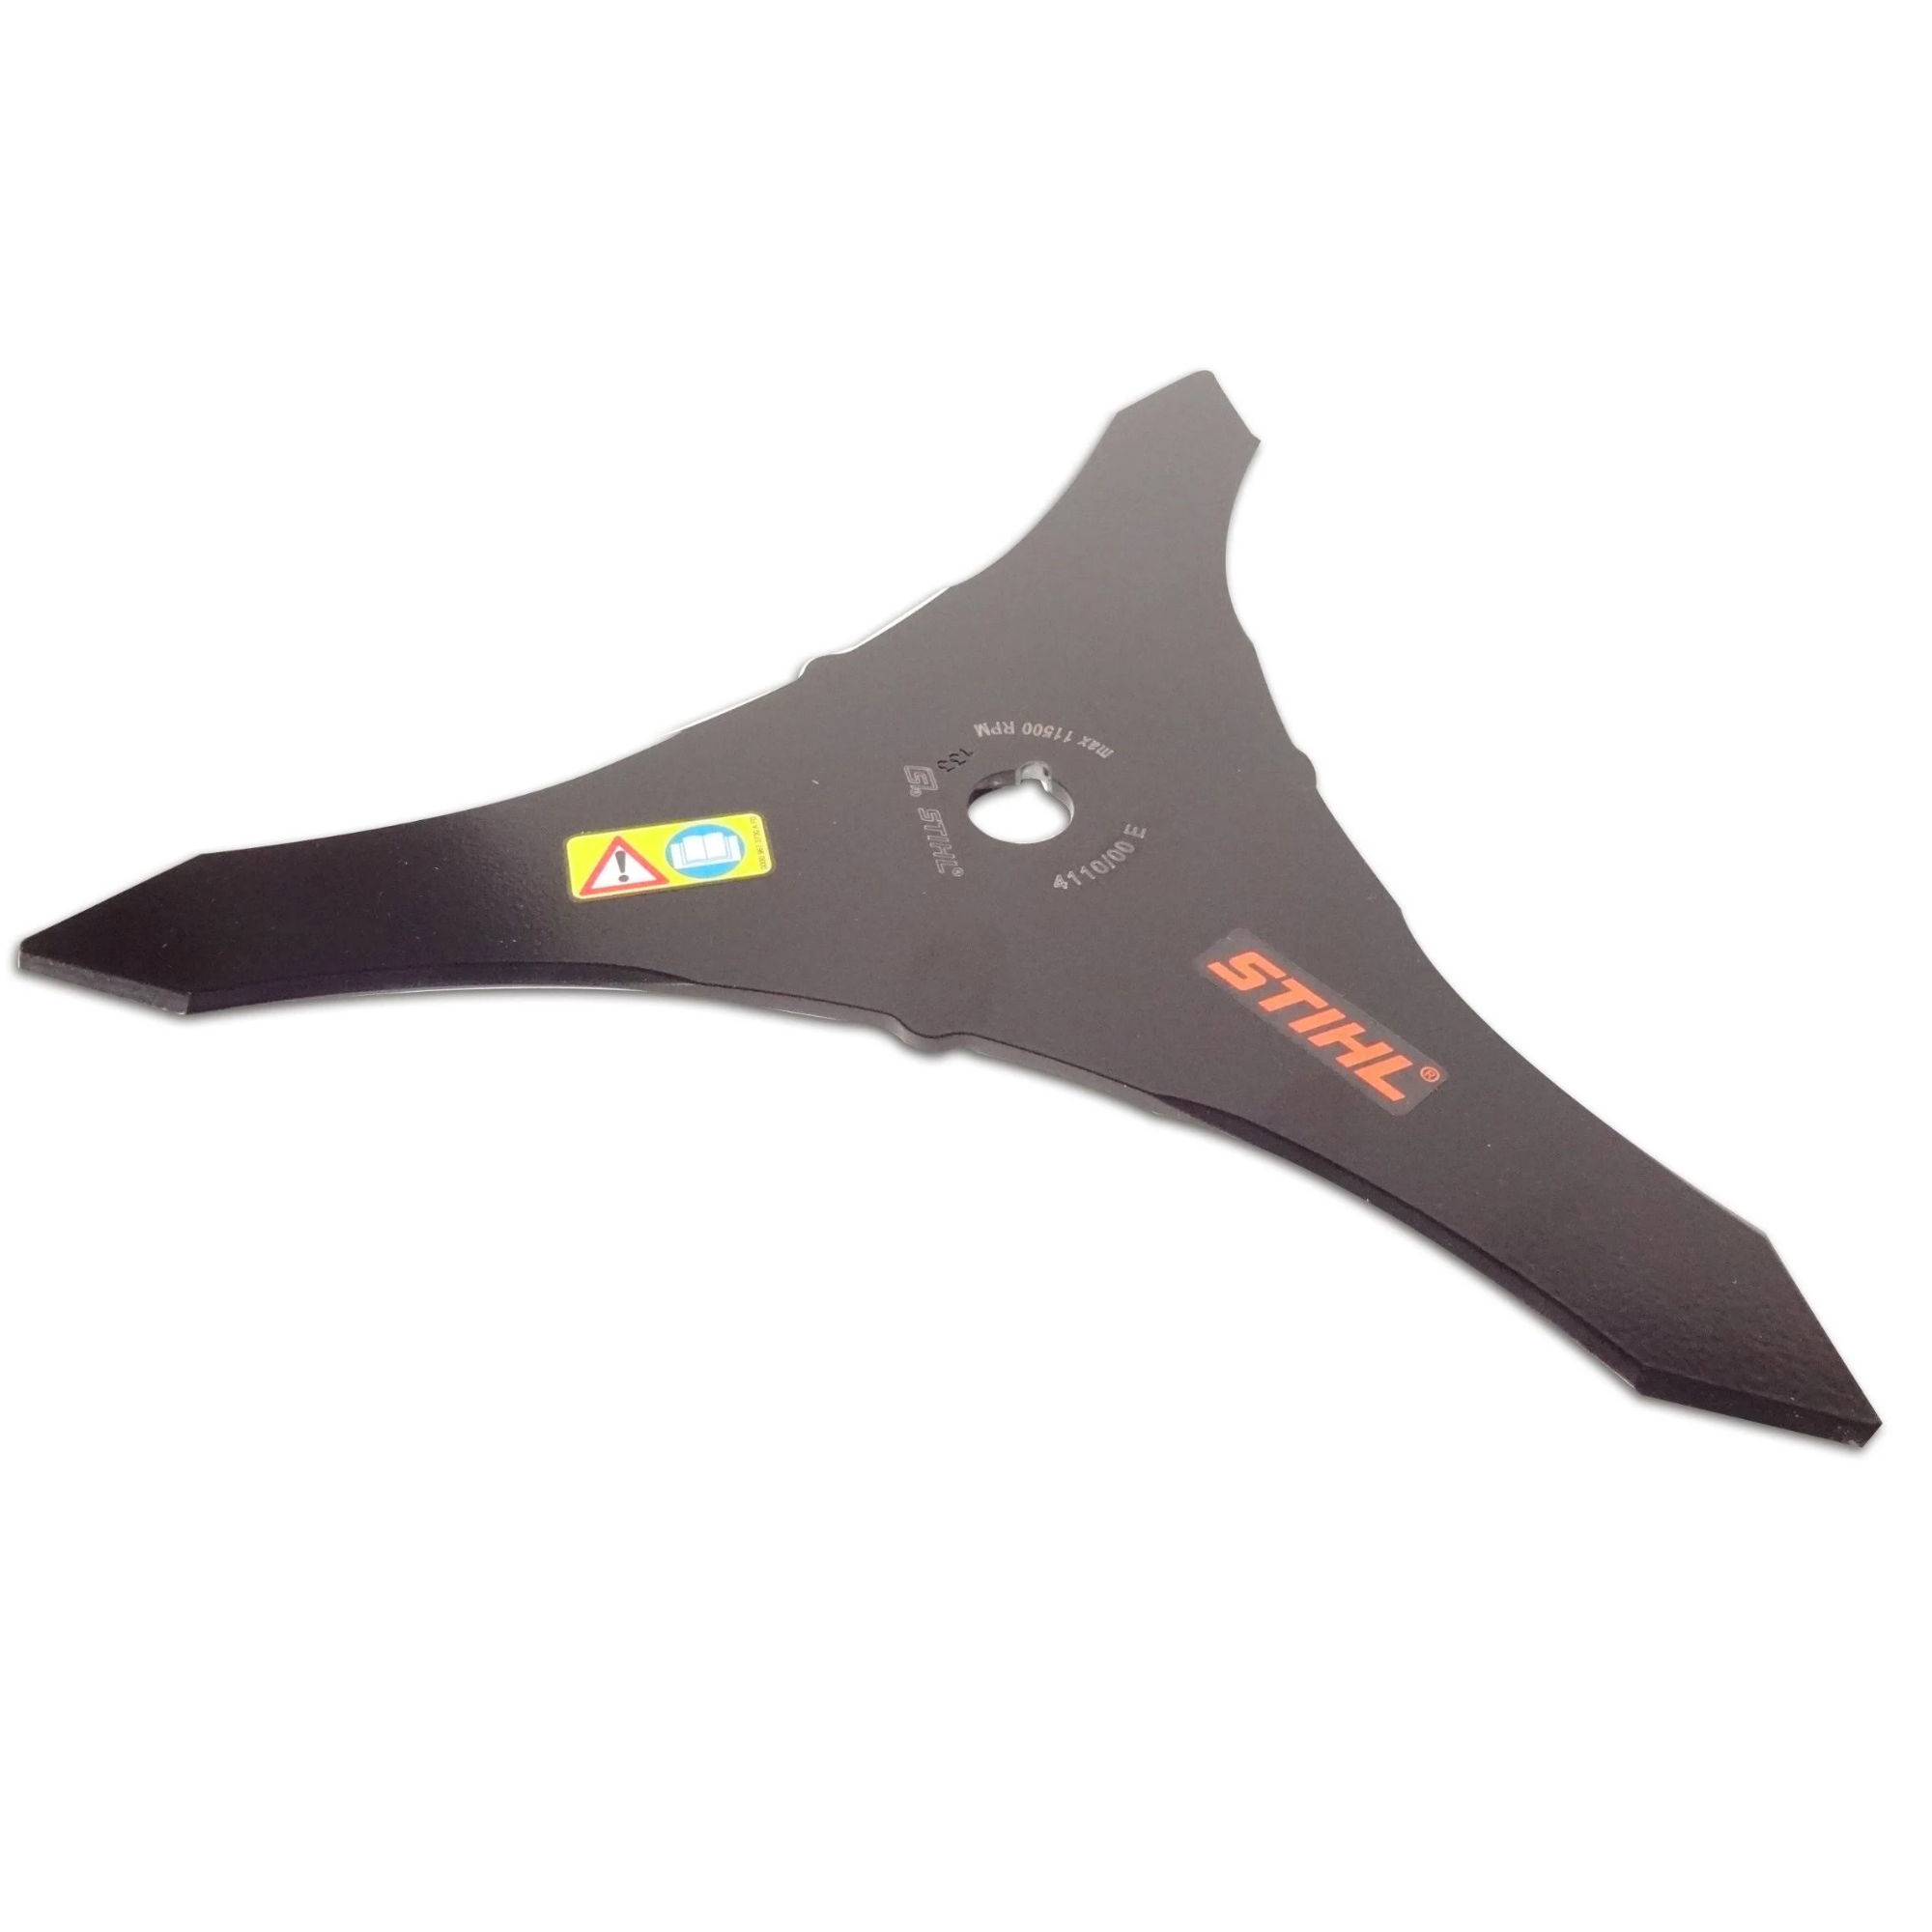 Stihl Brush Knife Blade 350mm x 20 mm |Steel Blade | 4110 713 4100